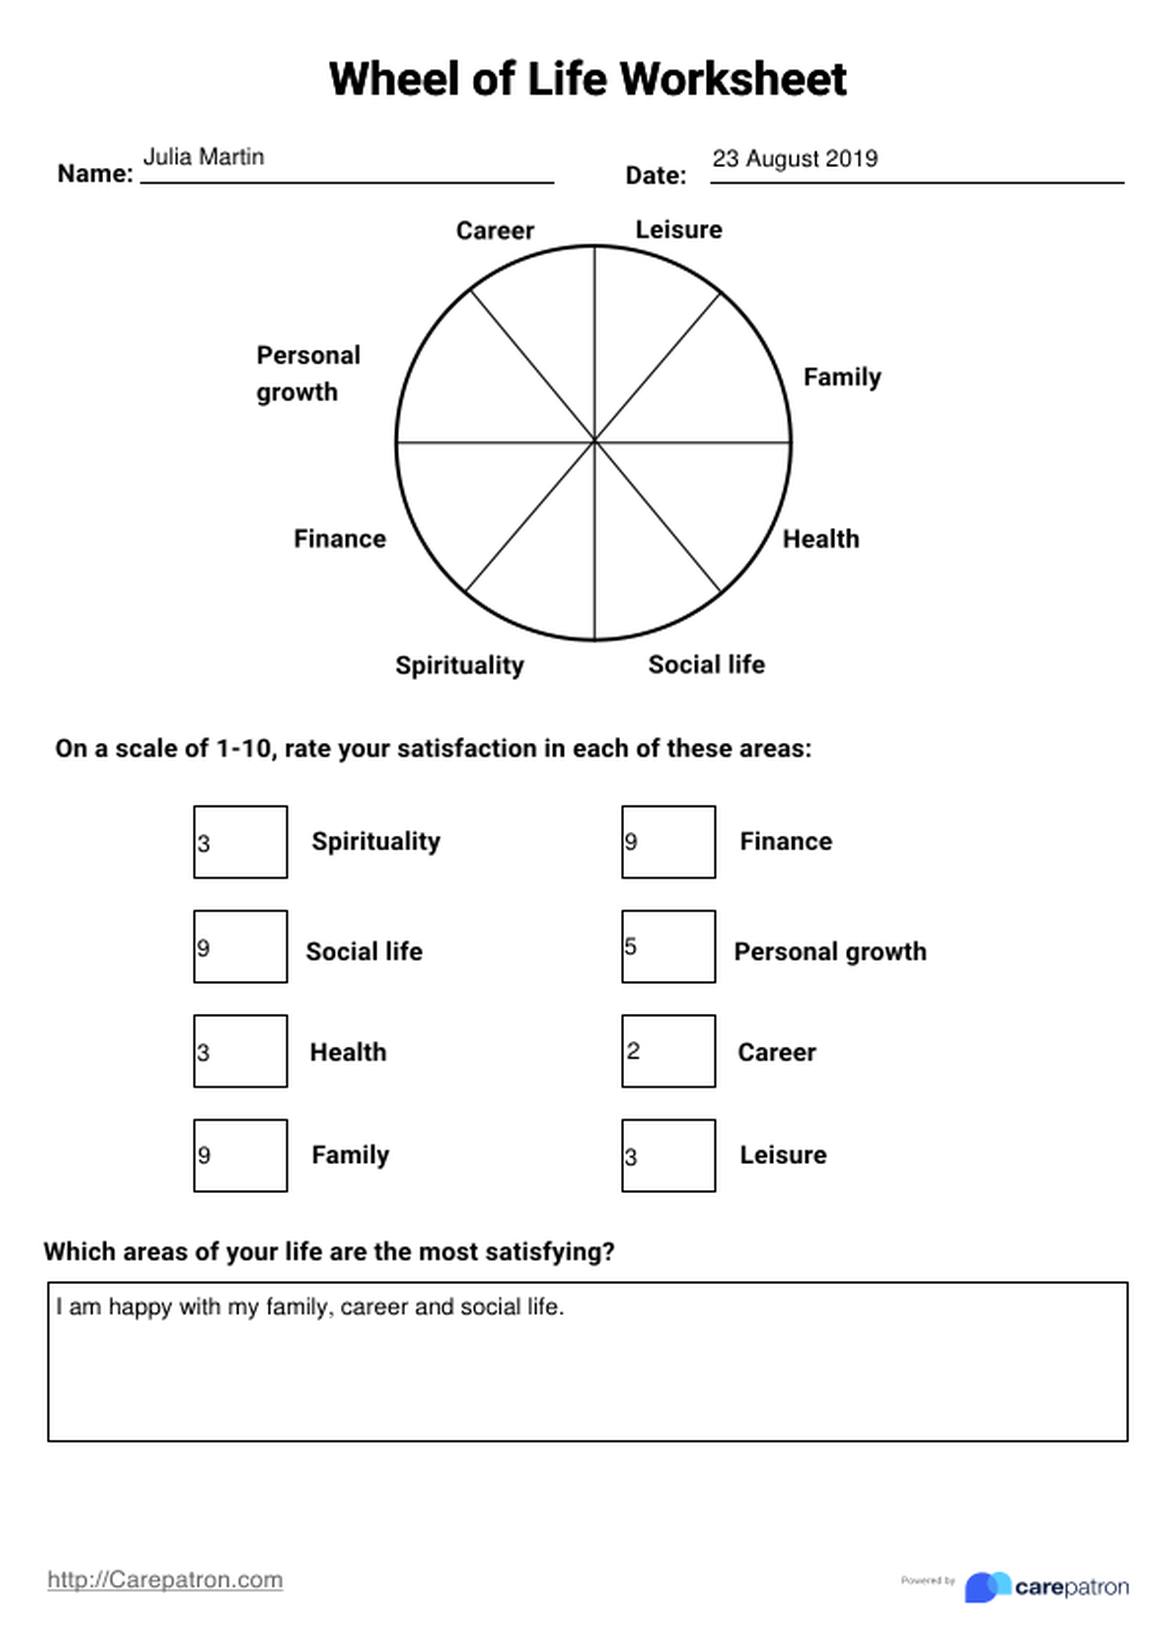 Wheel Of Life PDF Example